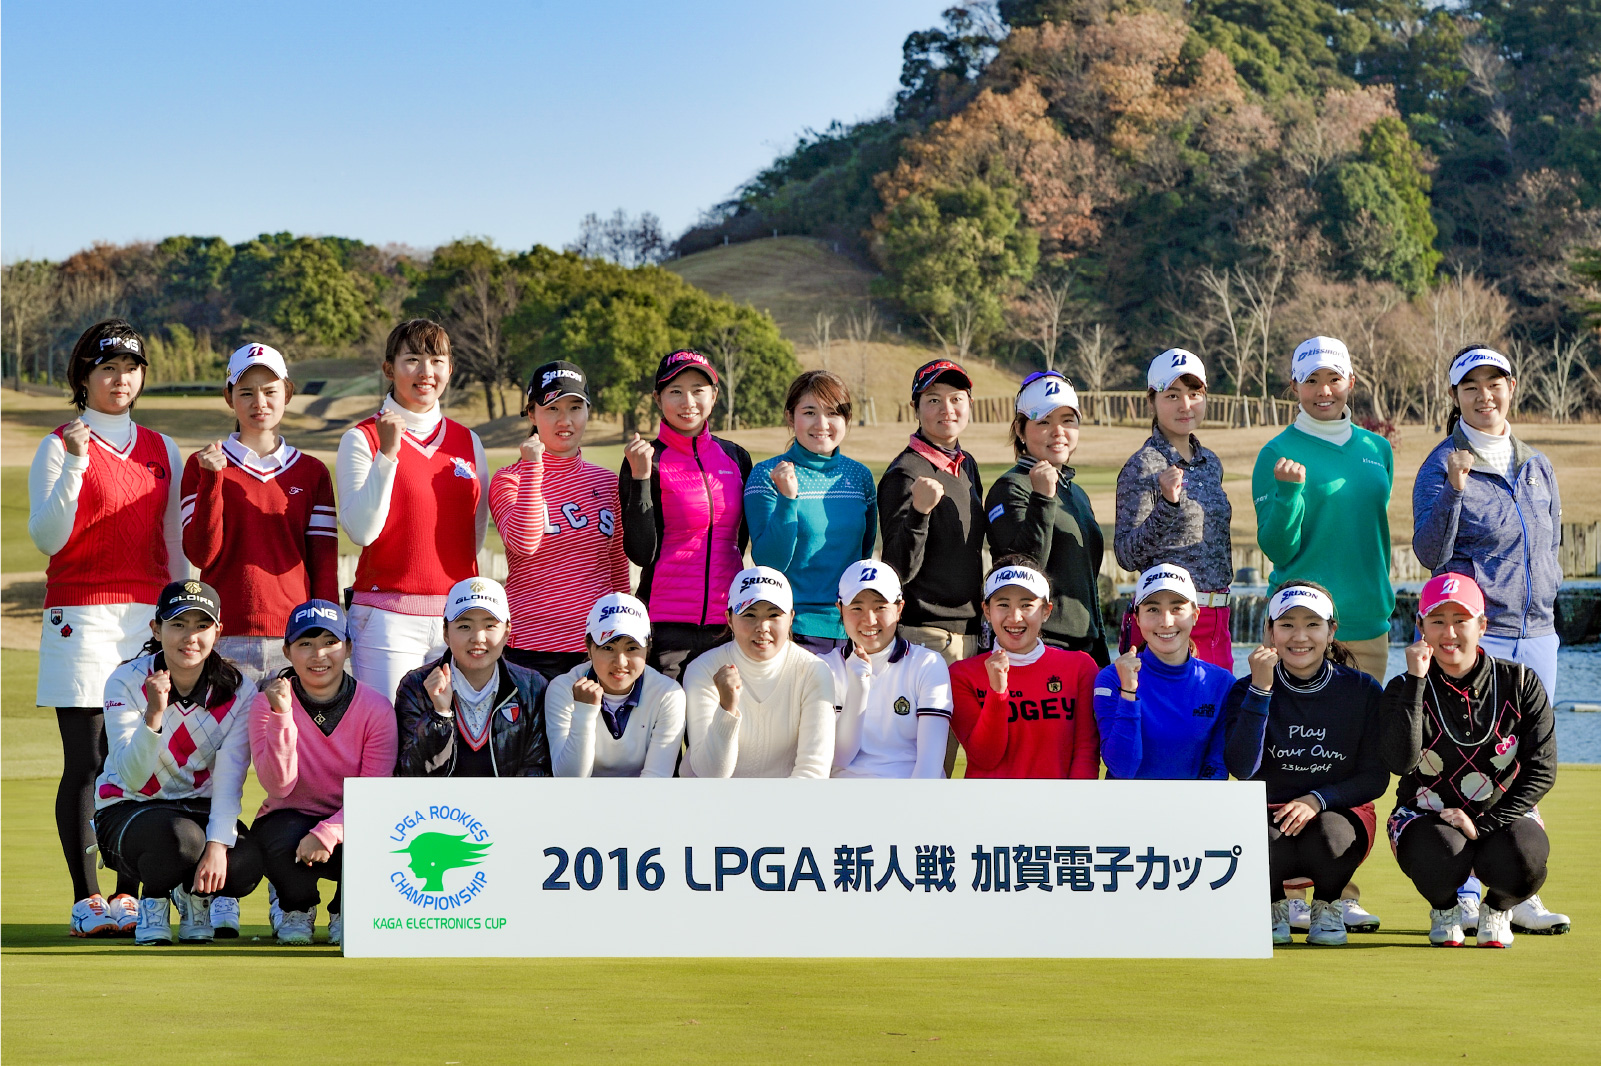 2016 LPGA 新人戦加賀電子カップ